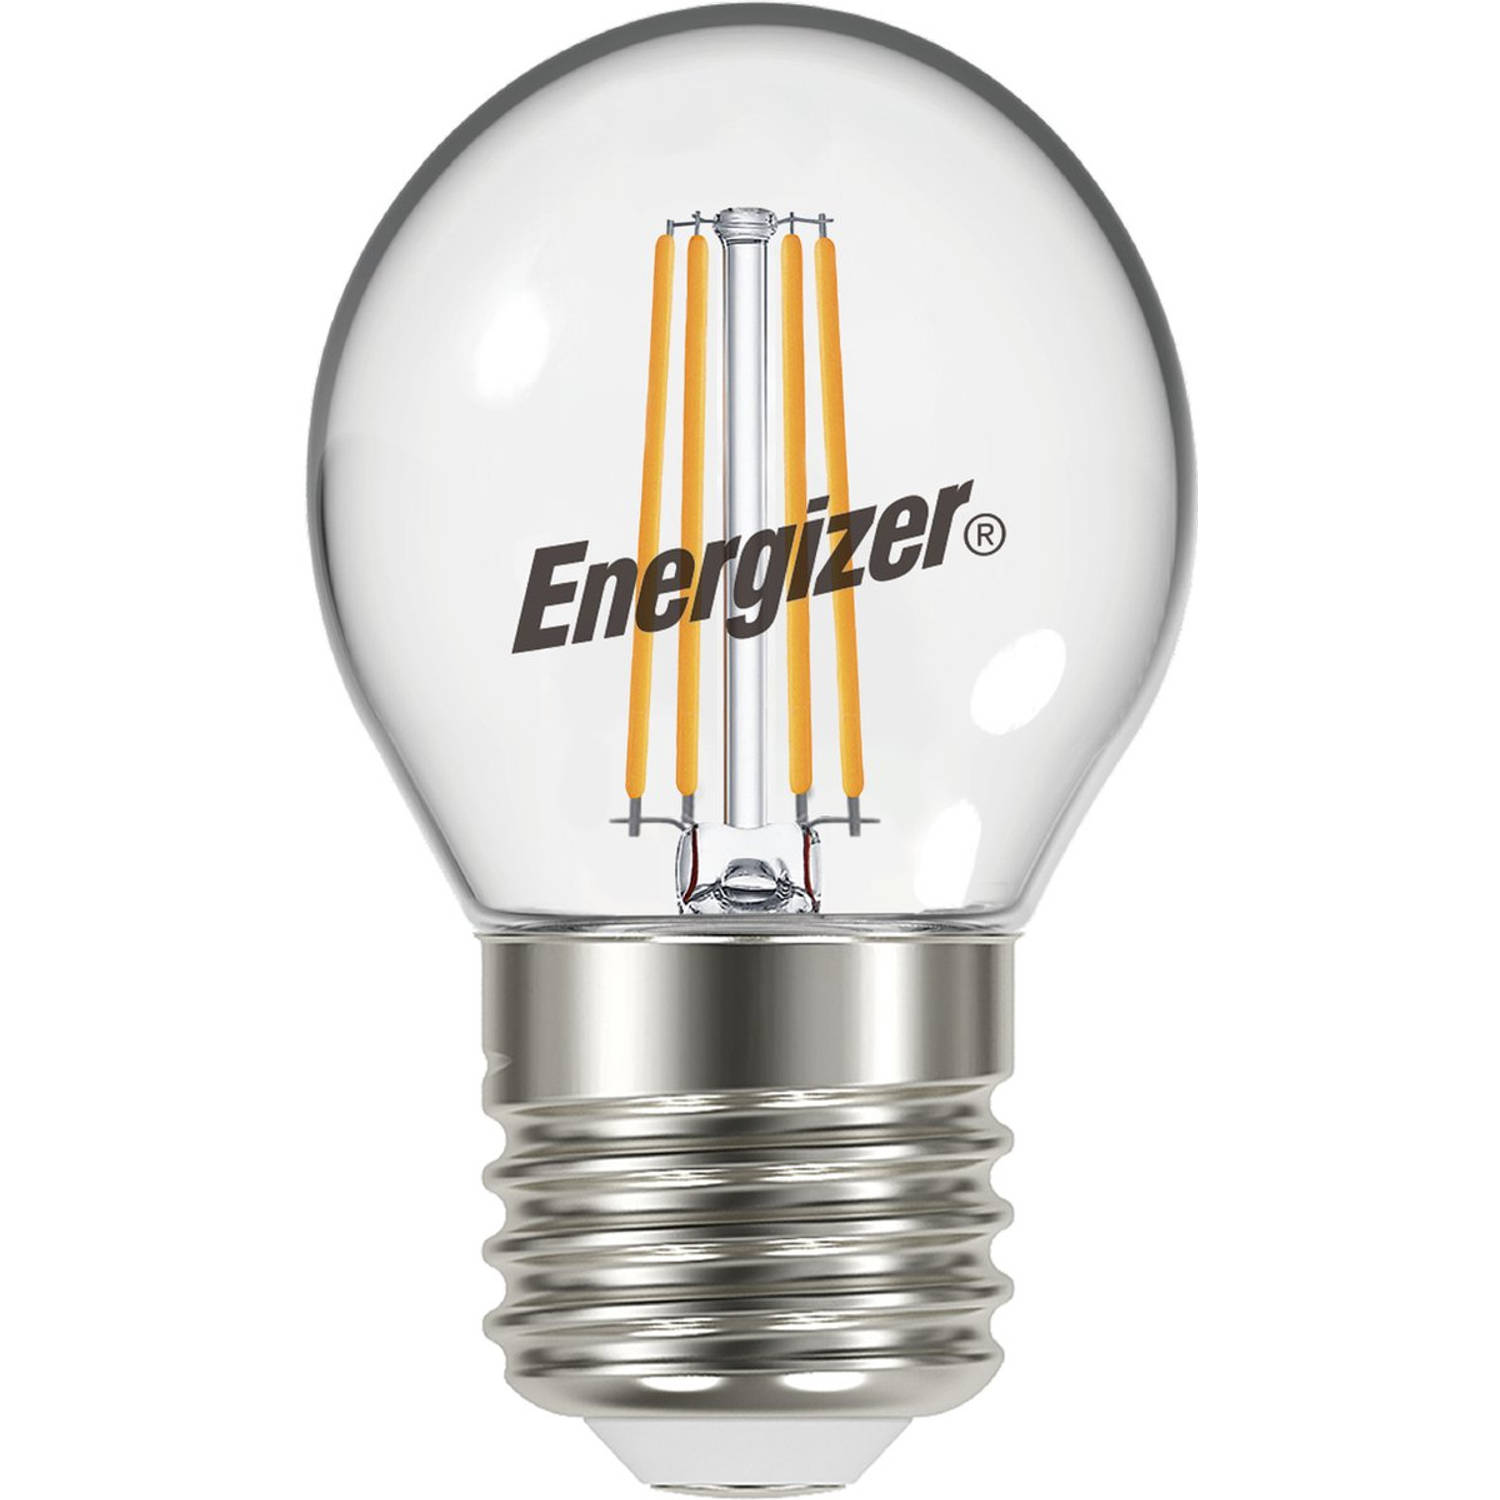 Energizer energiezuinige Led filament kogellamp - E27 - 5 Watt - warmwit licht - dimbaar - 5 stuks